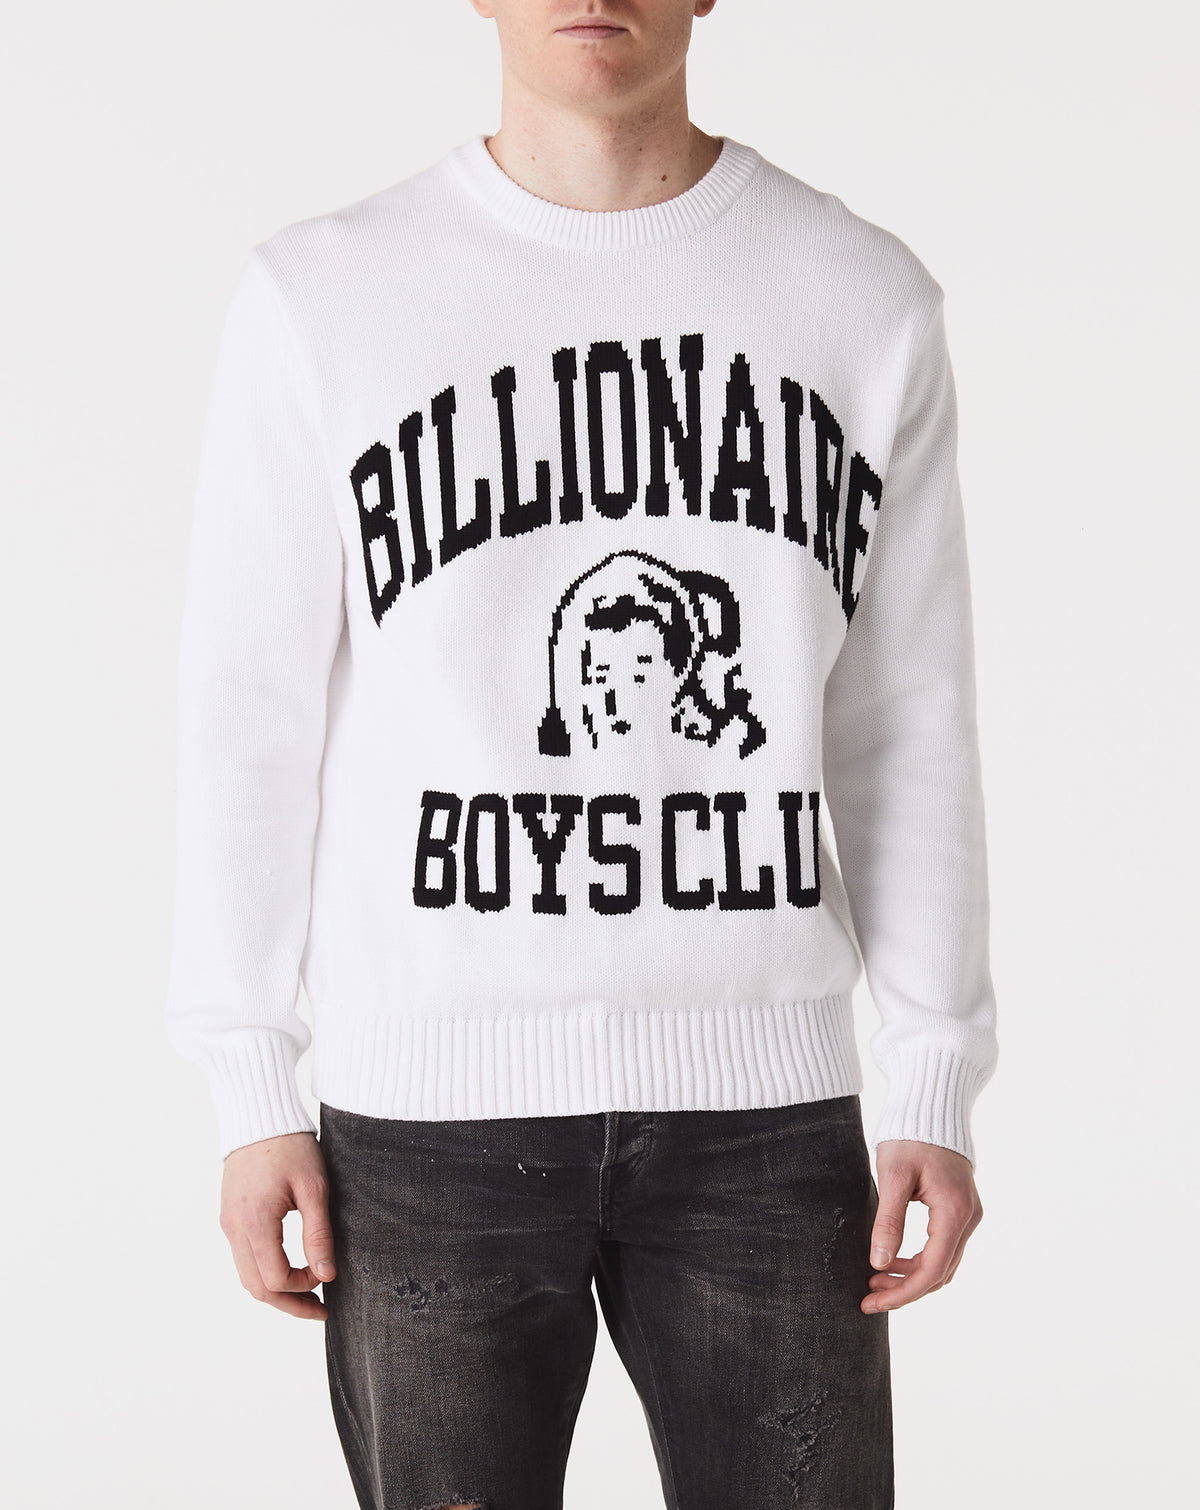 Billionaire Boys Club BB Campus Sweater - Rule of Next Apparel